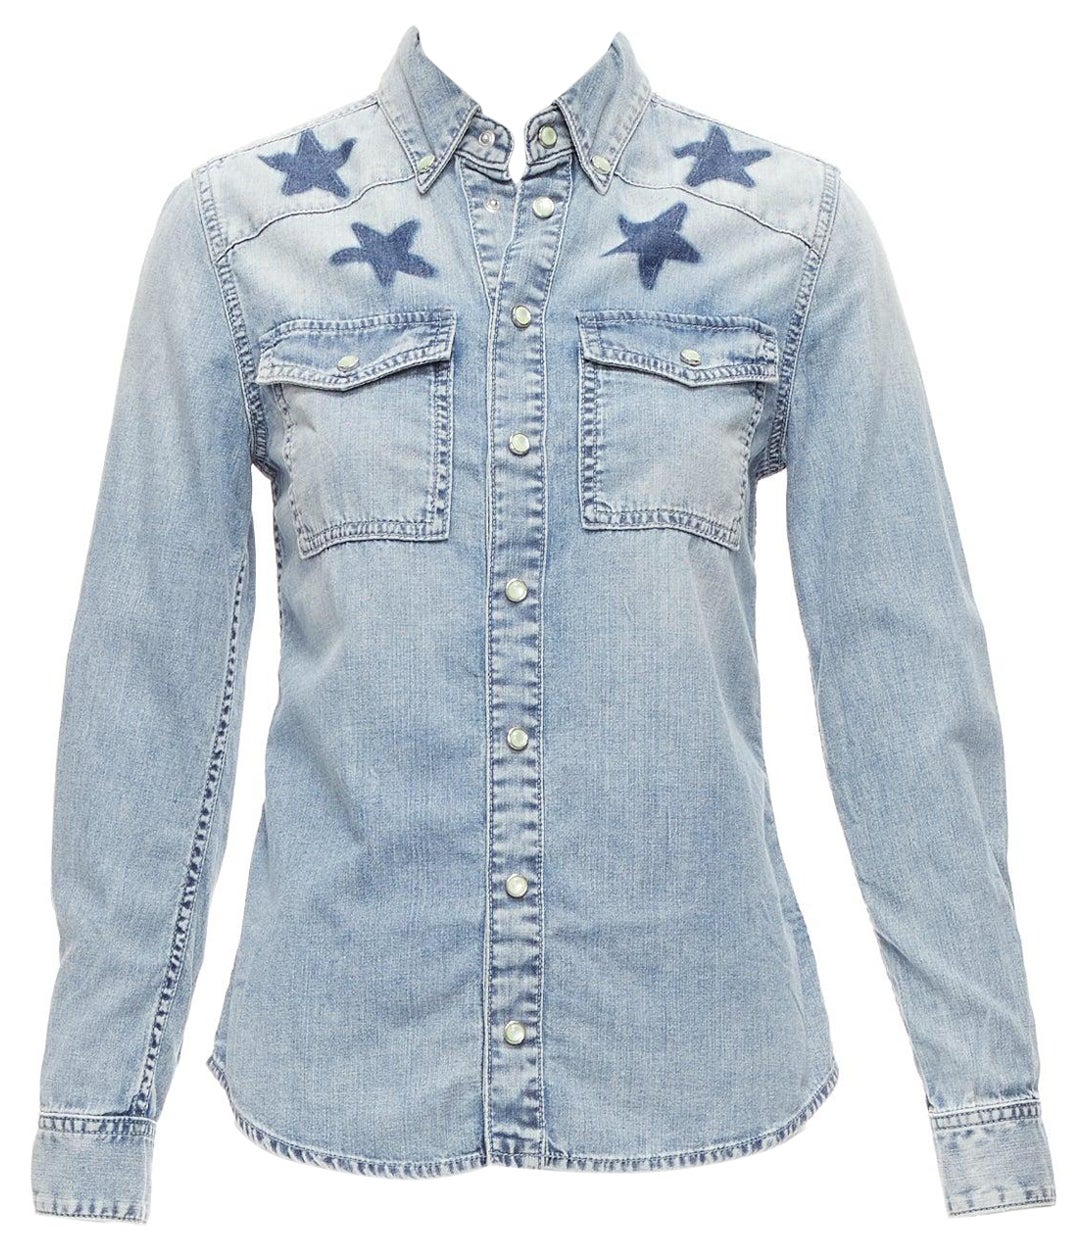 GIVENCHY Riccardo Tisci blue distressed denim star collar dress shirt FR36 S For Sale